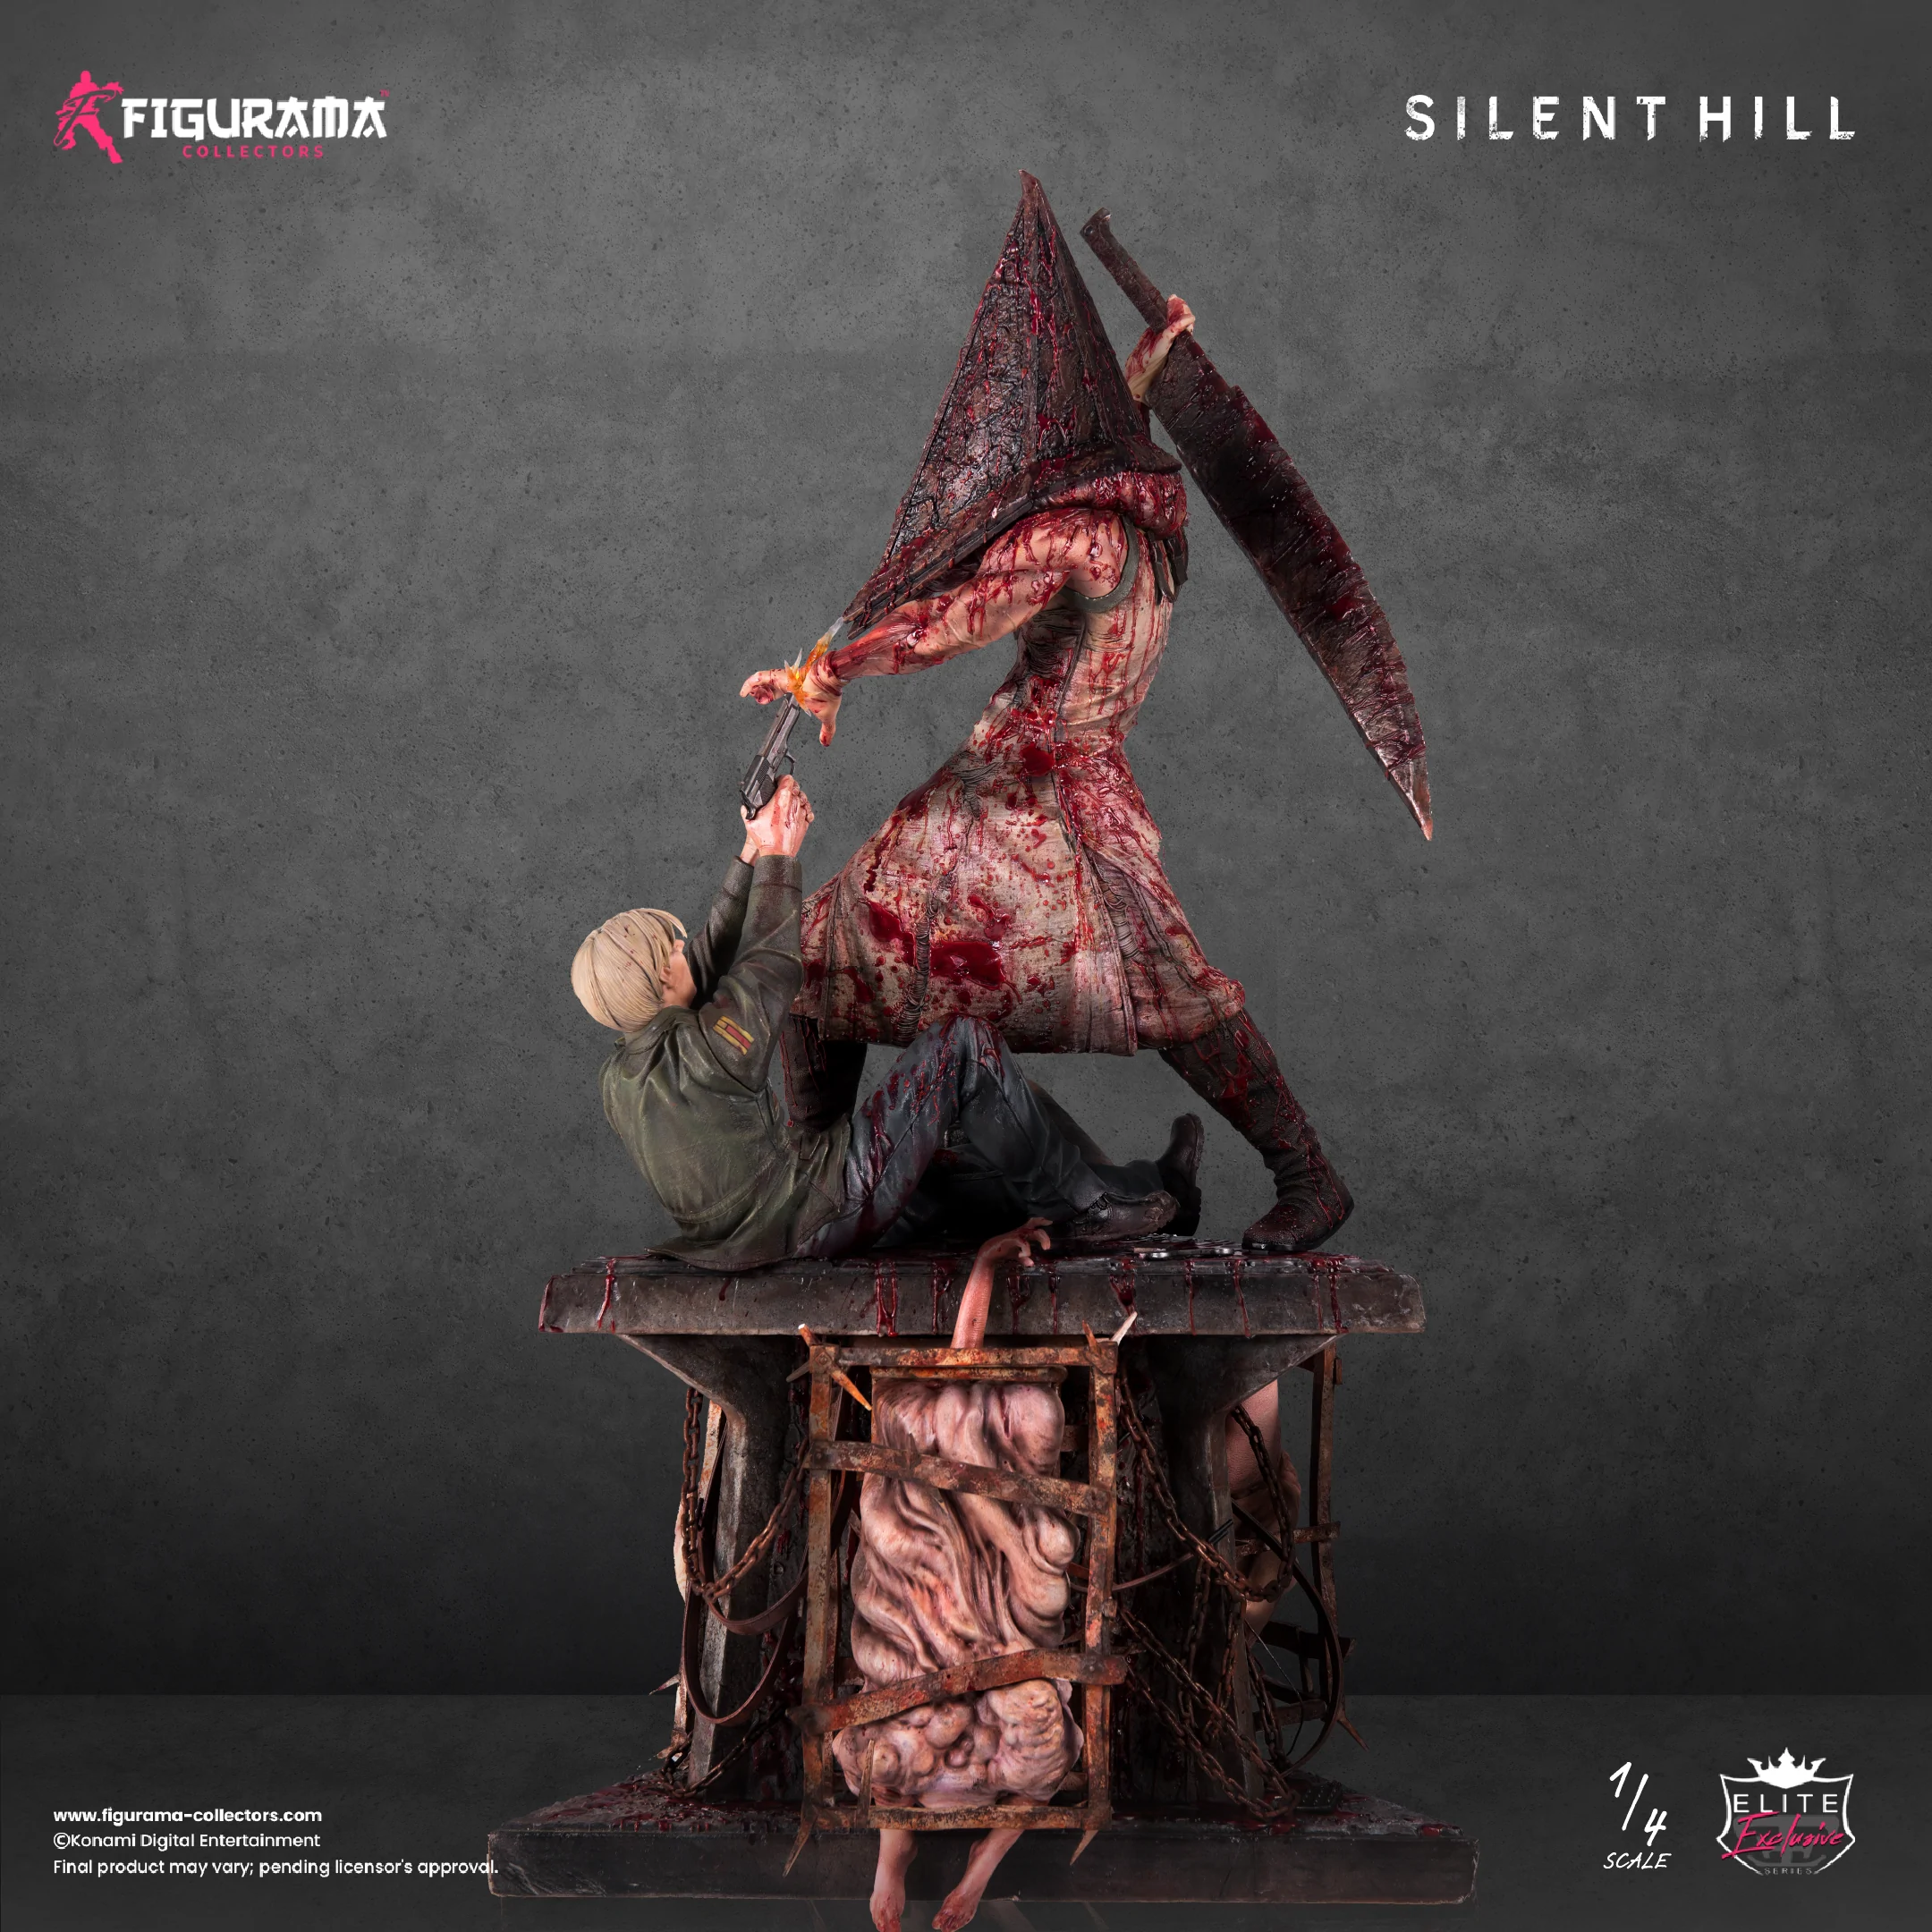 Silent Hill: James Sunderland & Pyramid Blight